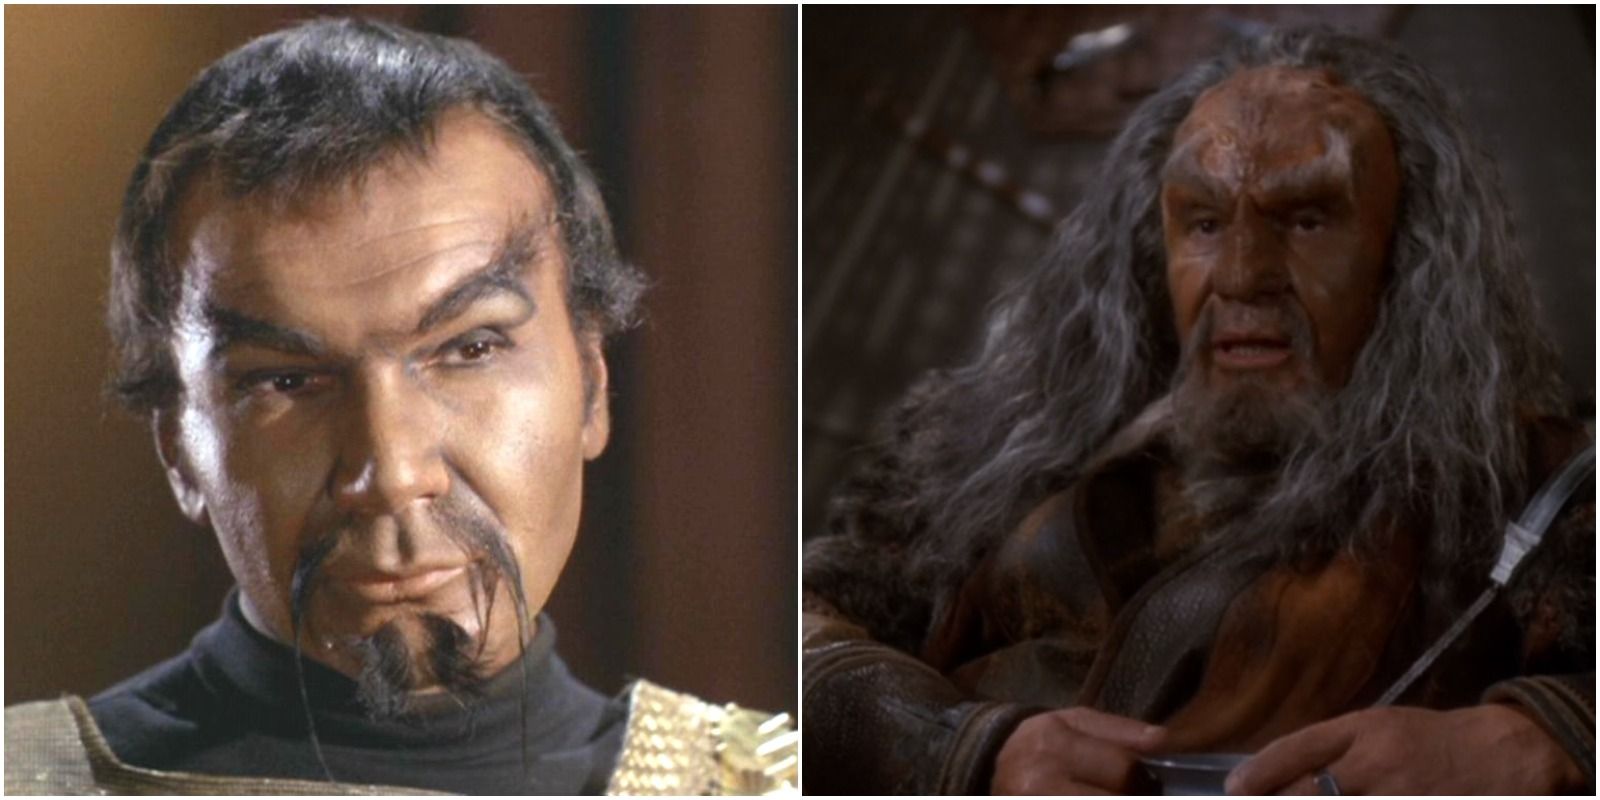 TOS and TNG version of the Klingon Kor